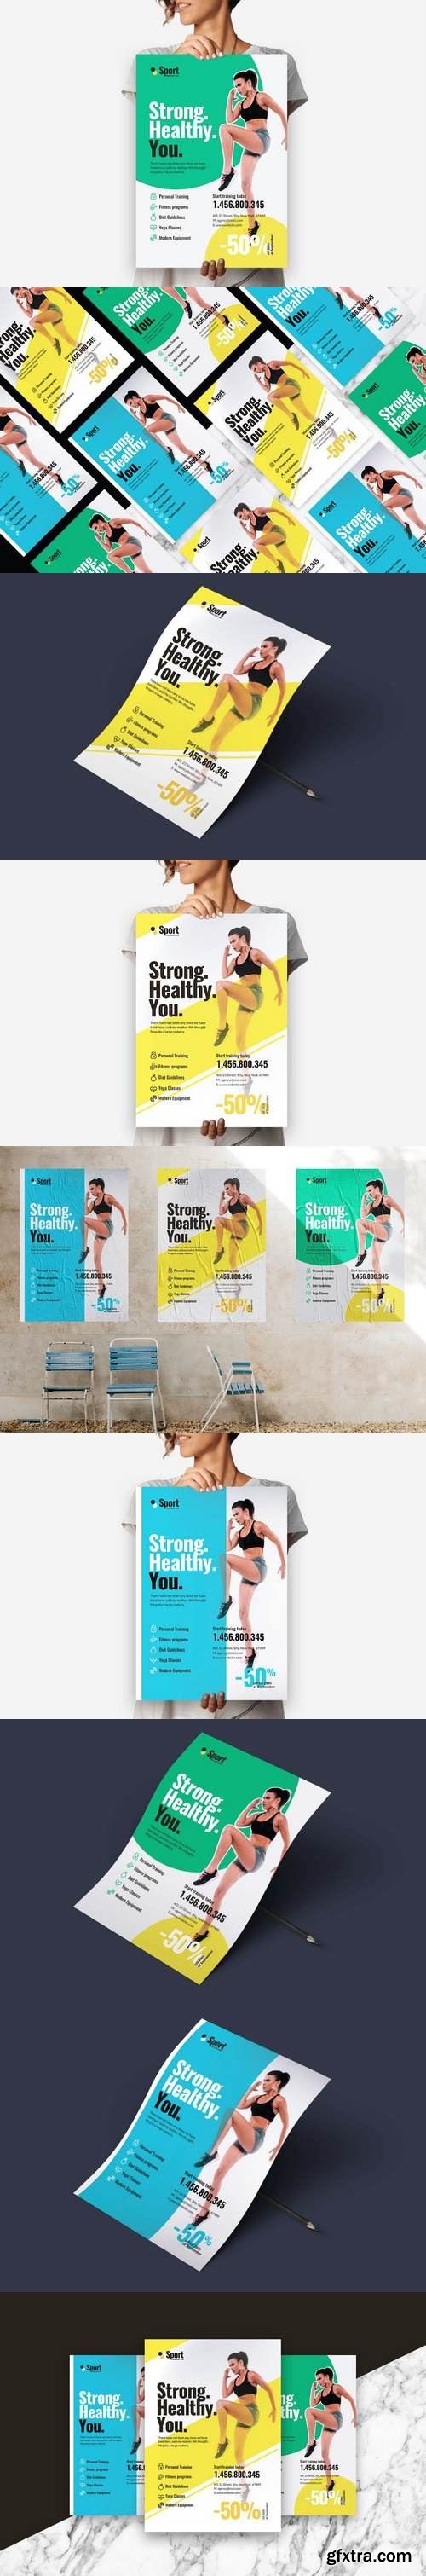 Fitness Flyer/Poster